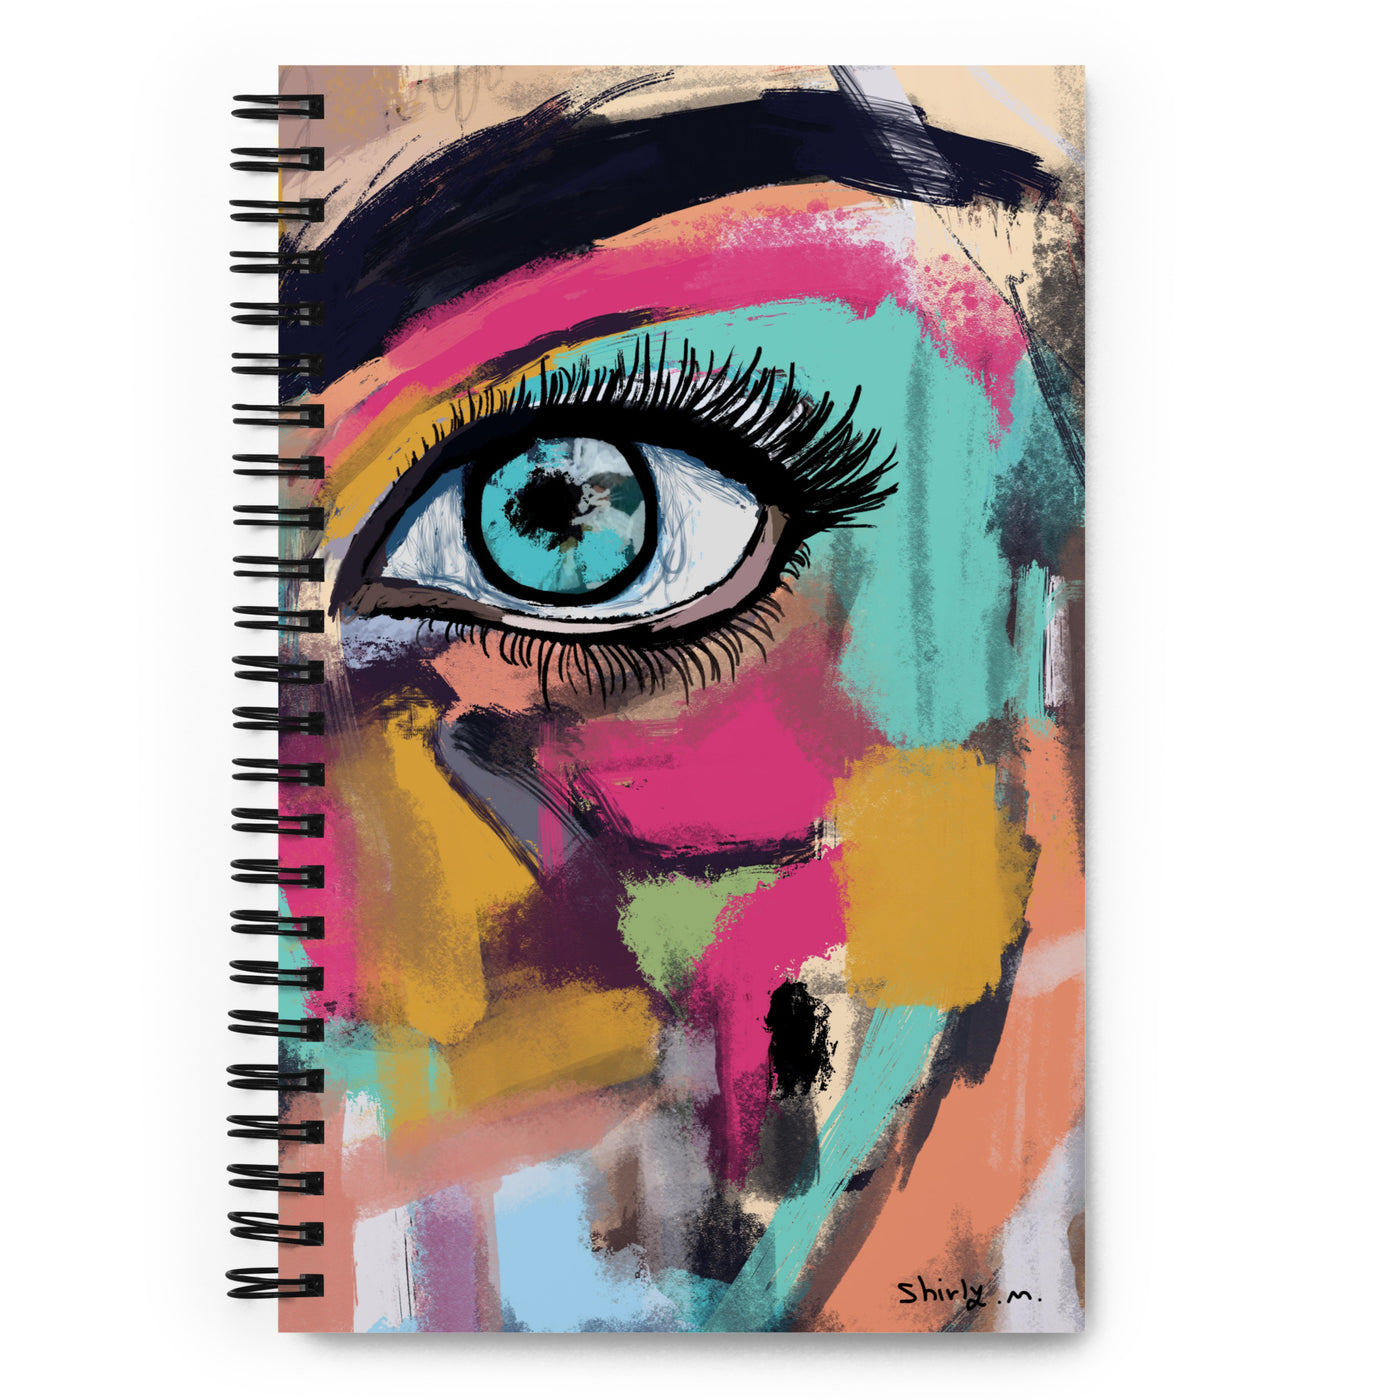 Abstract eye Spiral notebook